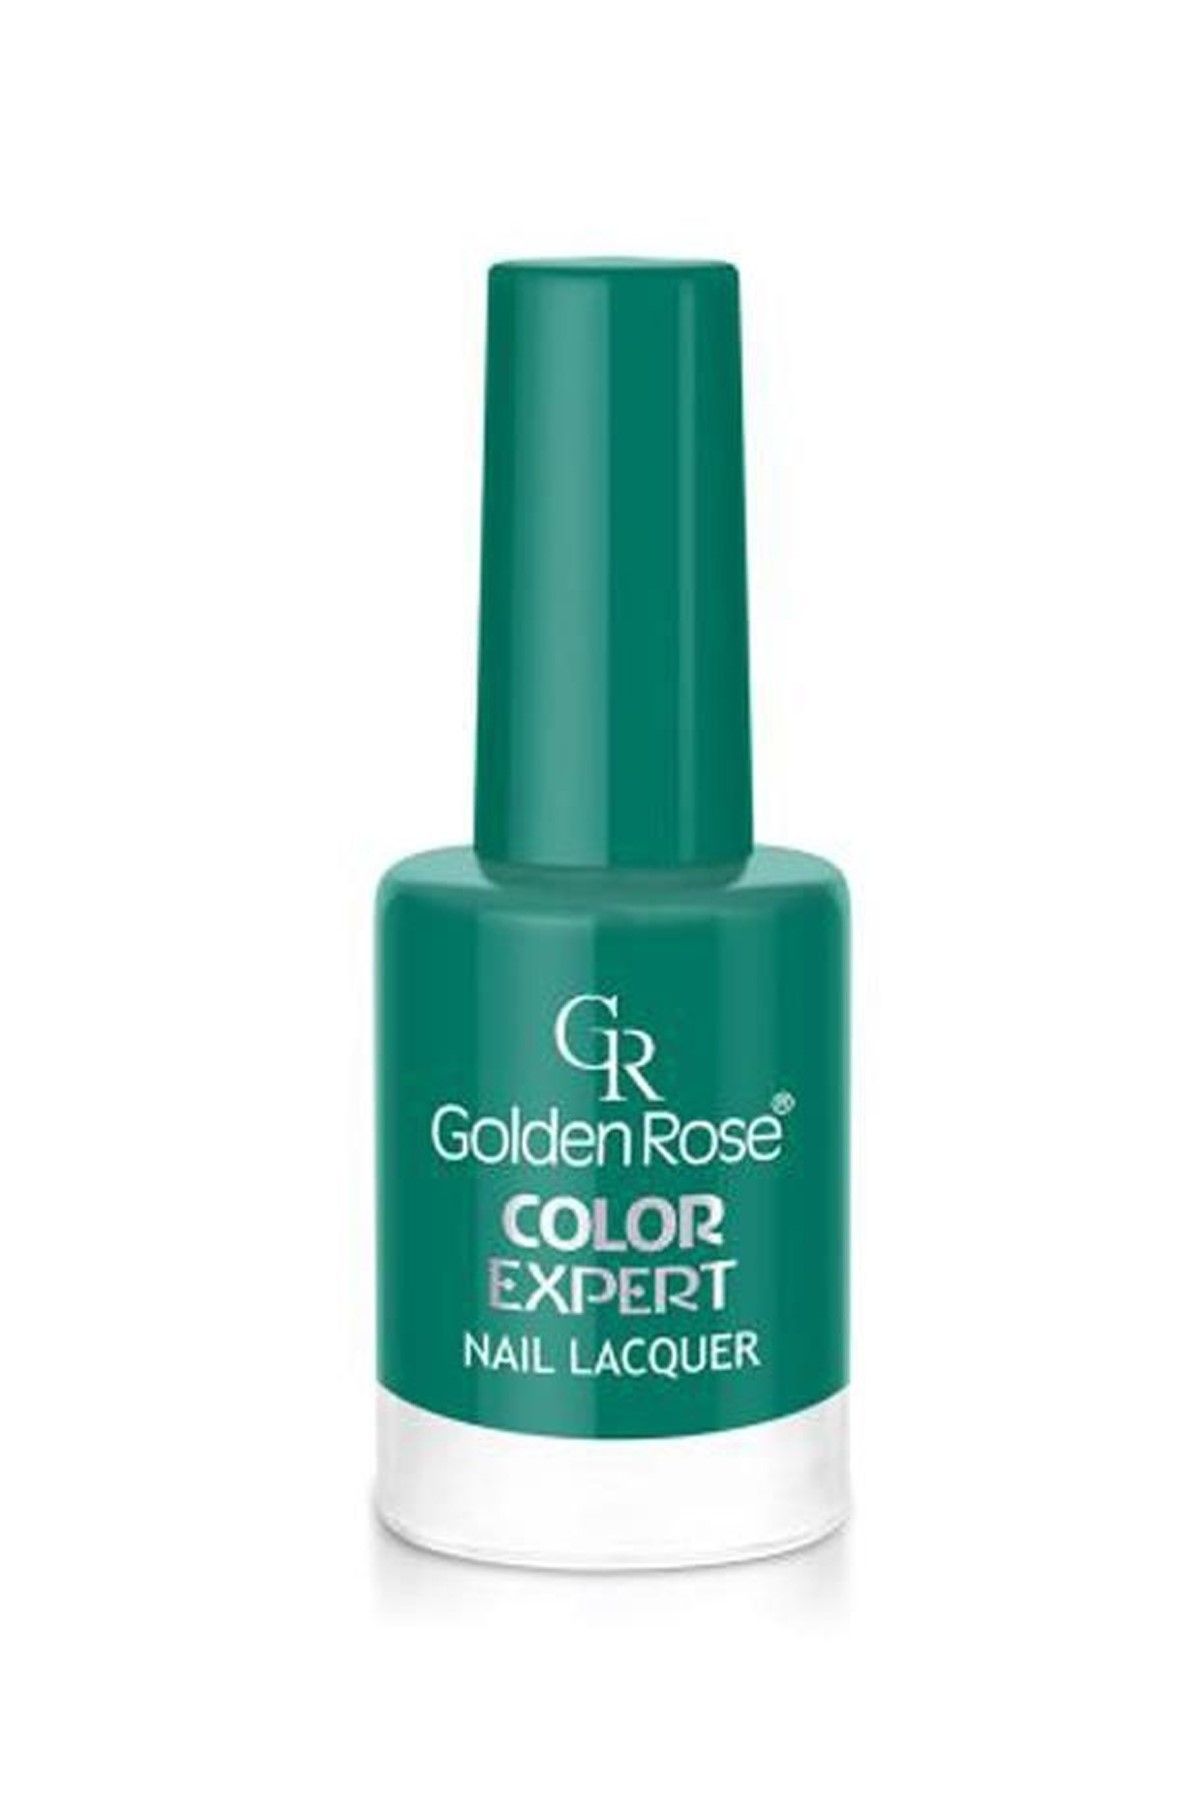 Golden Rose Oje - Color Expert Nail Lacquer No: 55 8691190703554